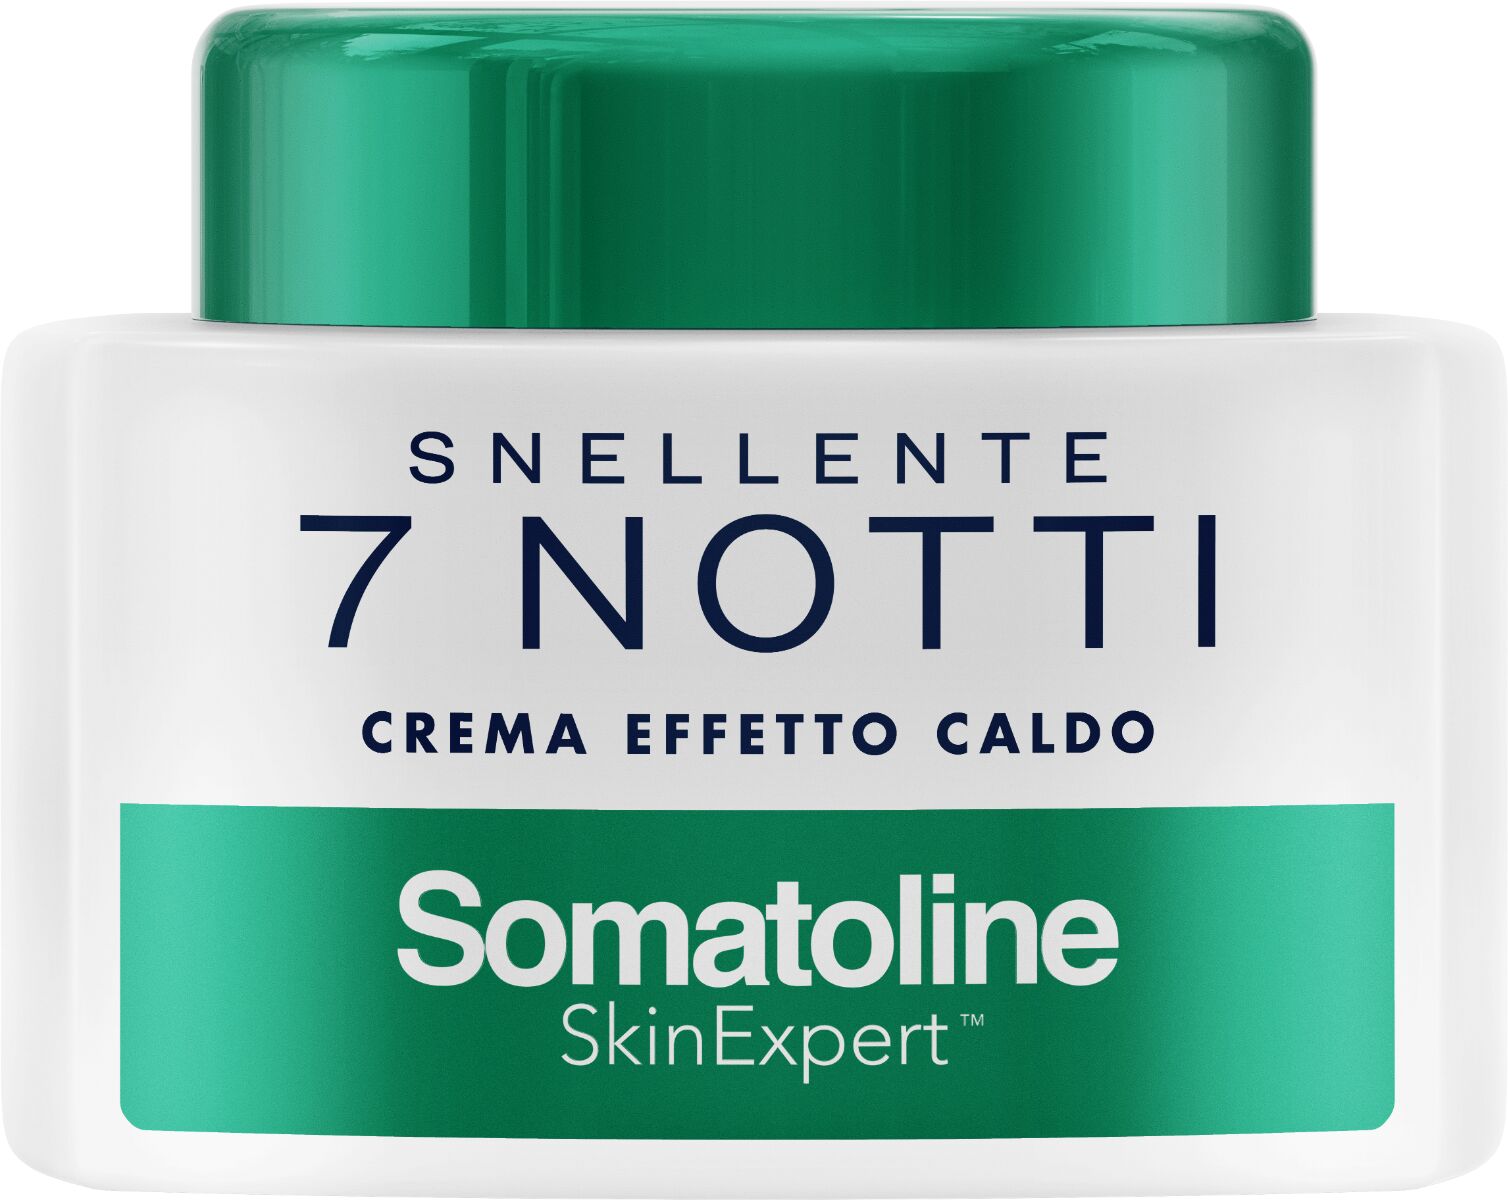 somatoline skinexpert somatoline skin expert crema snellente 7 notti- effetto caldo 400 ml